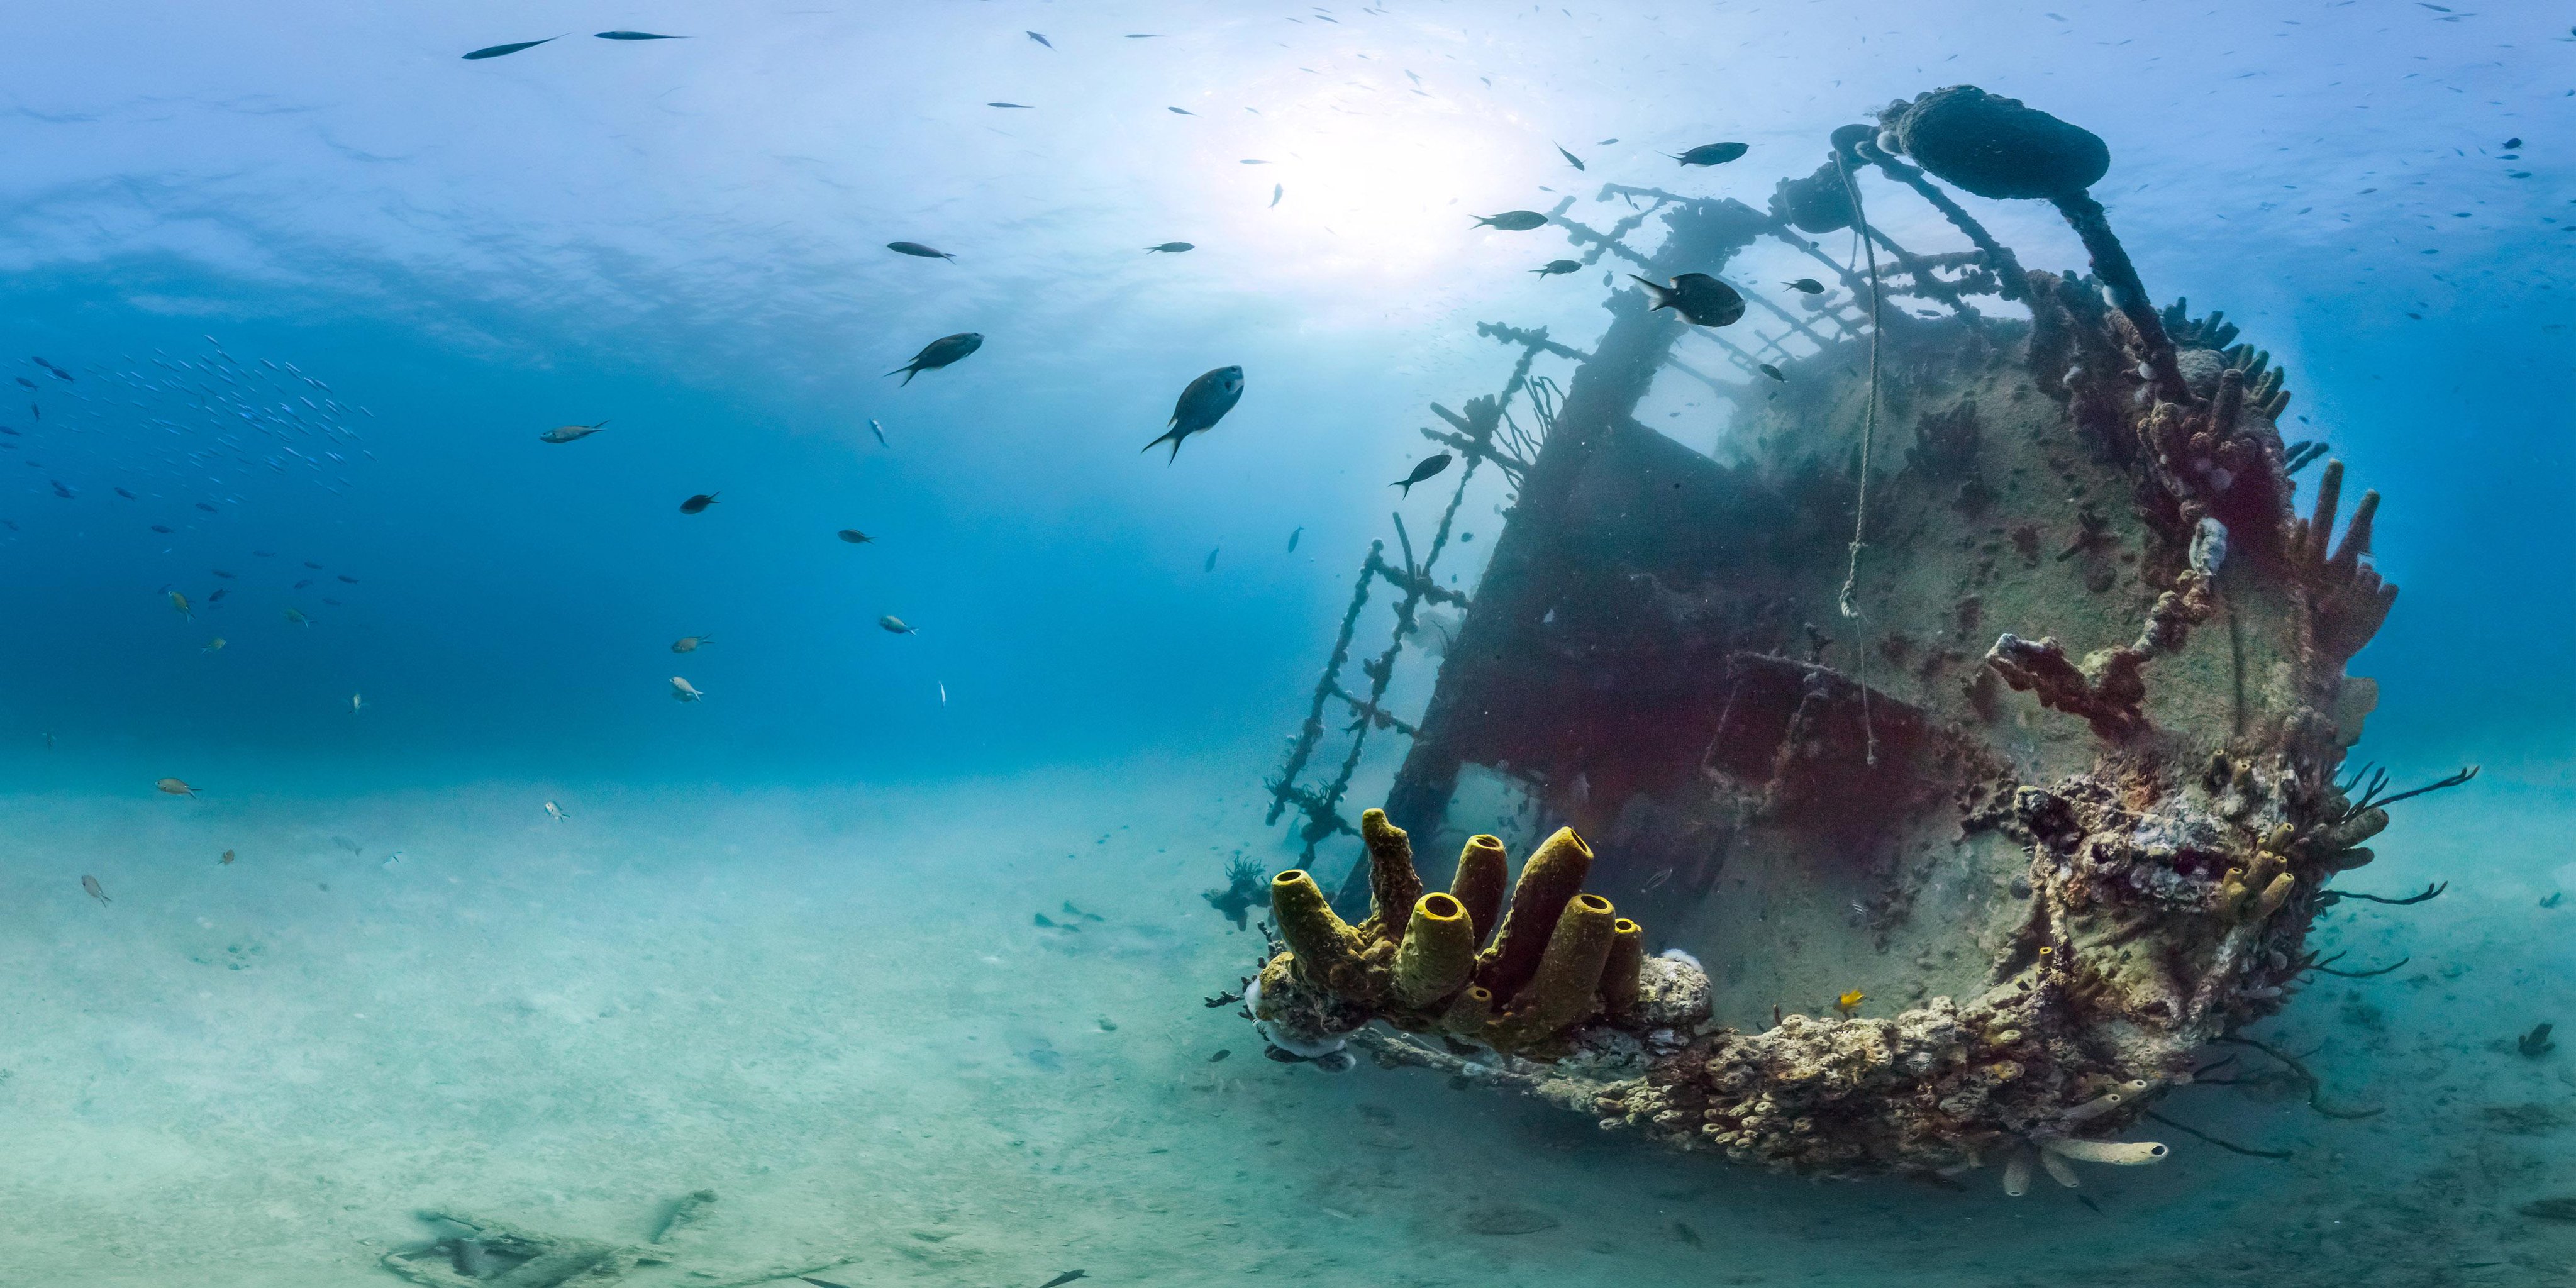 Antilla Shipwreck below the waters of Aruba